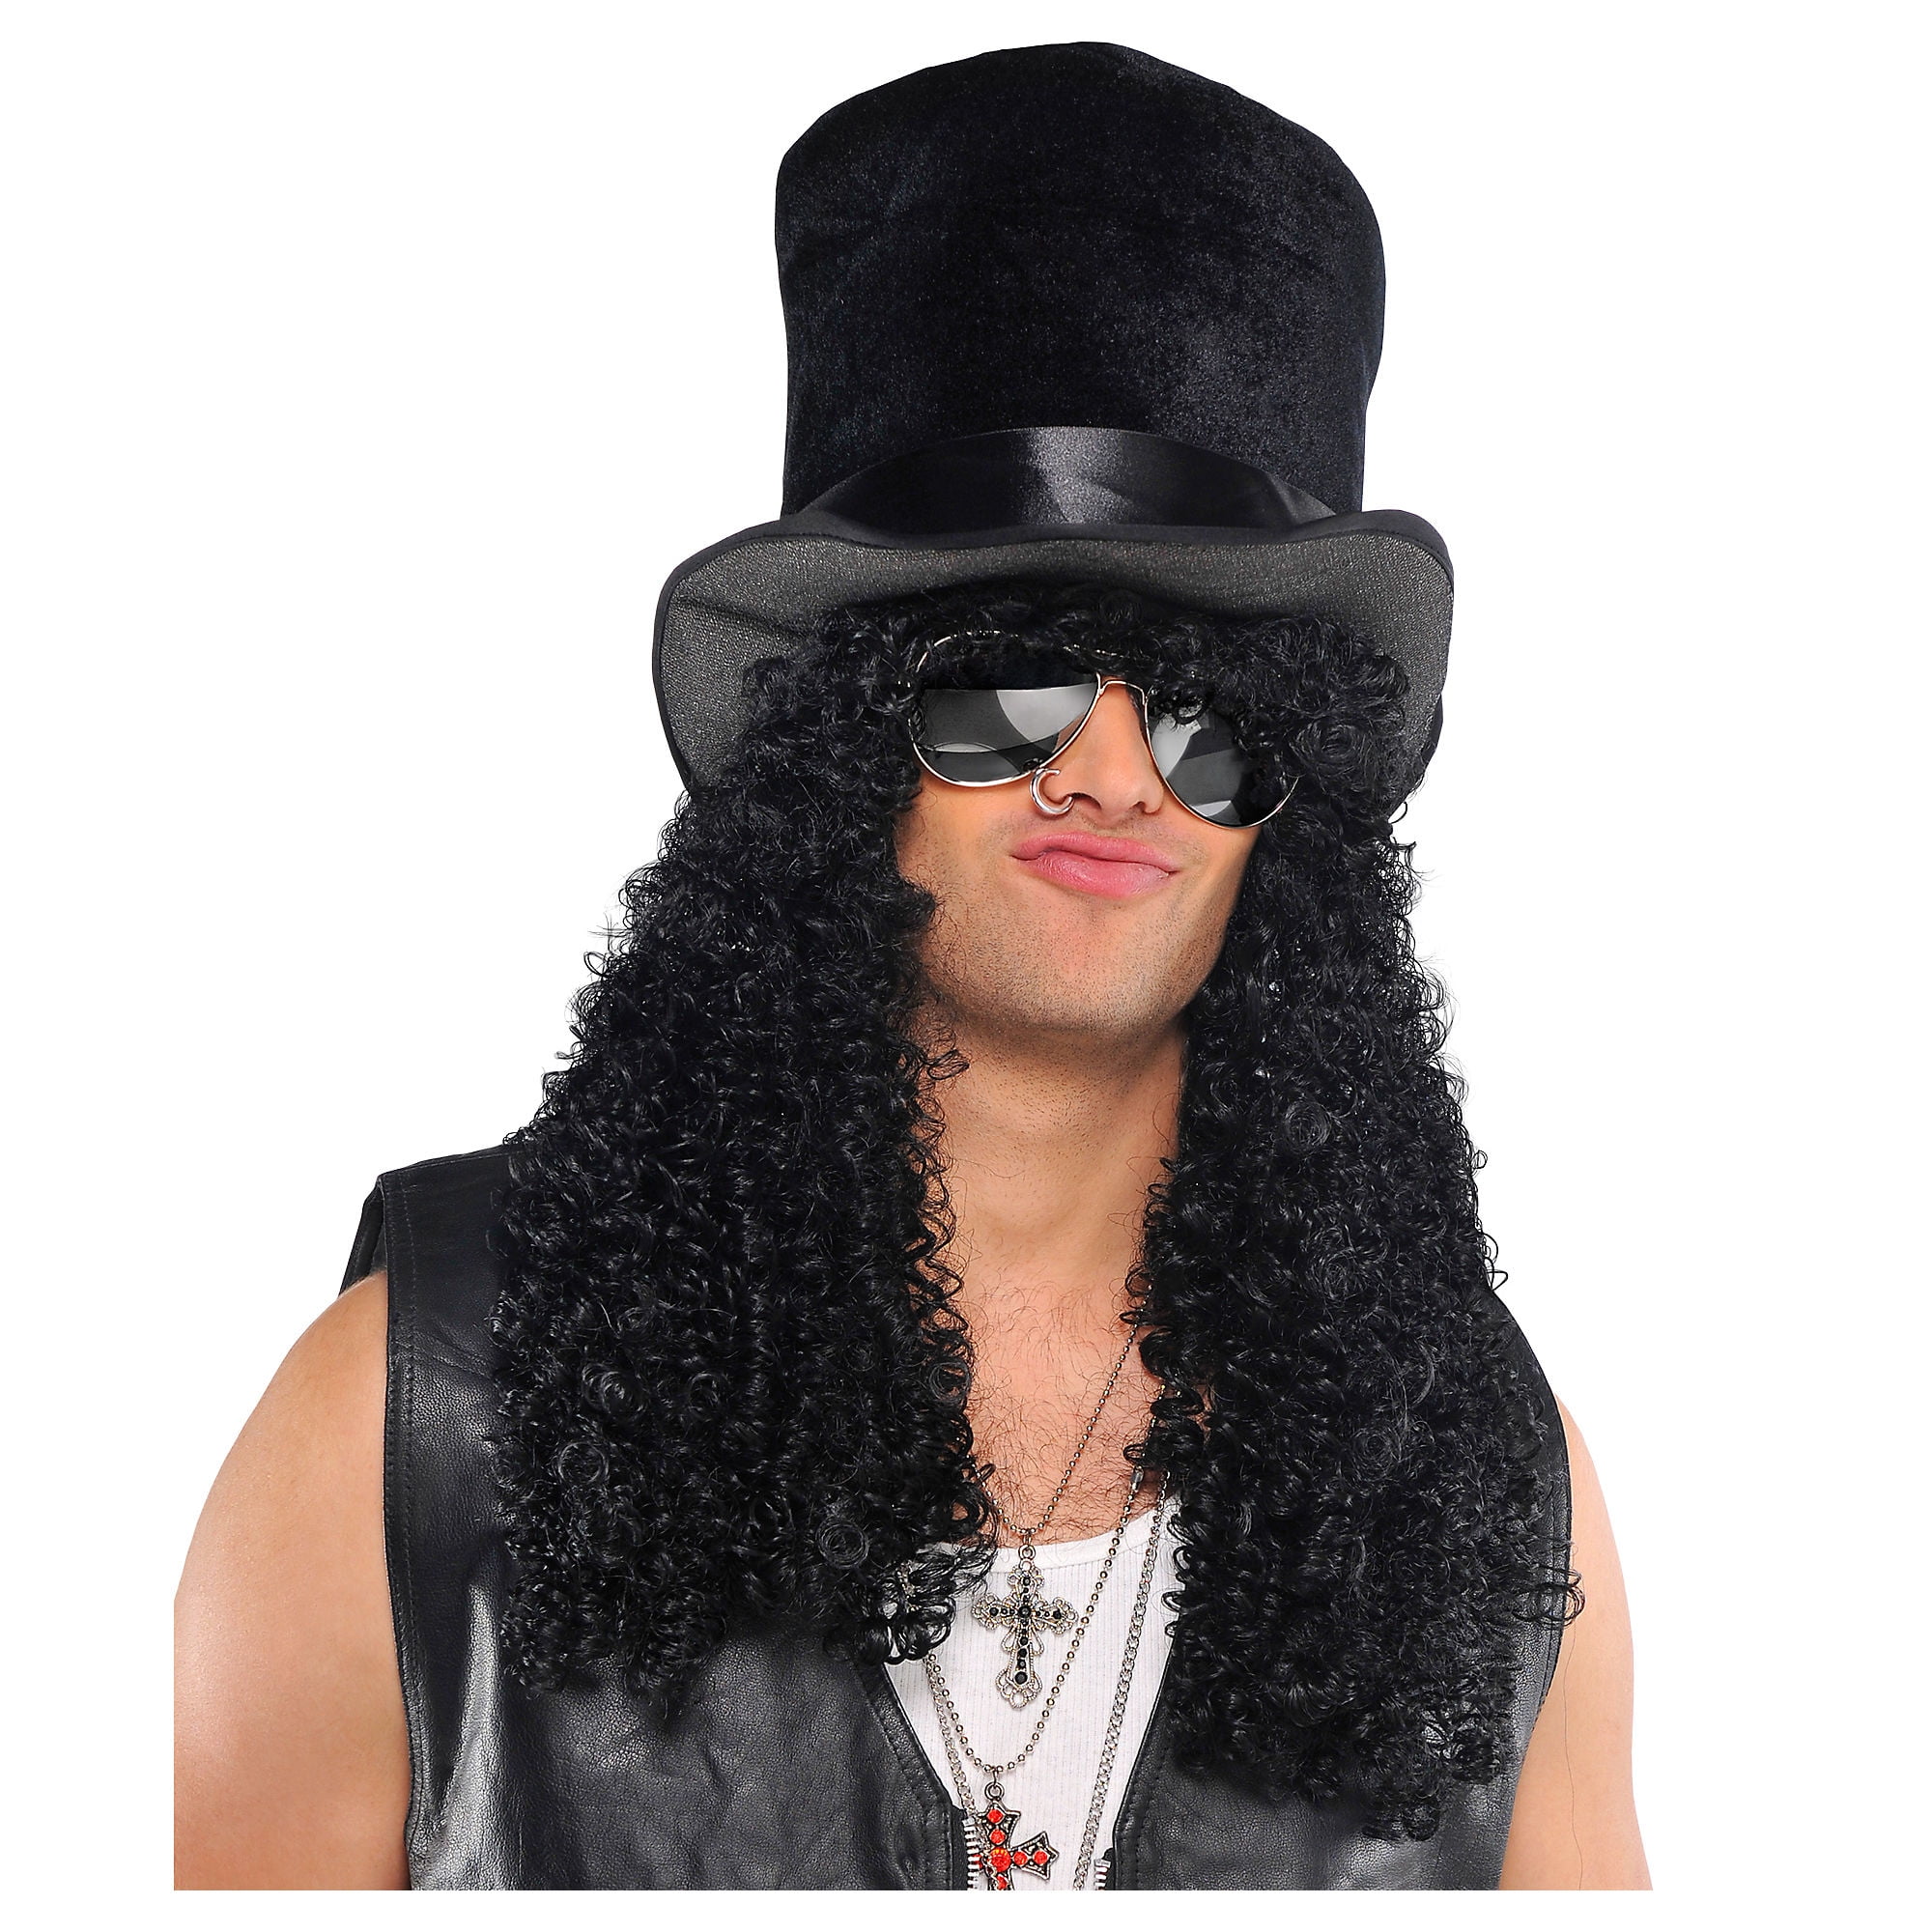 Slash Guns & Roses Top Hat & Hair/Wig Fancy Dress 80s Mens Celebrity Costume Ac 